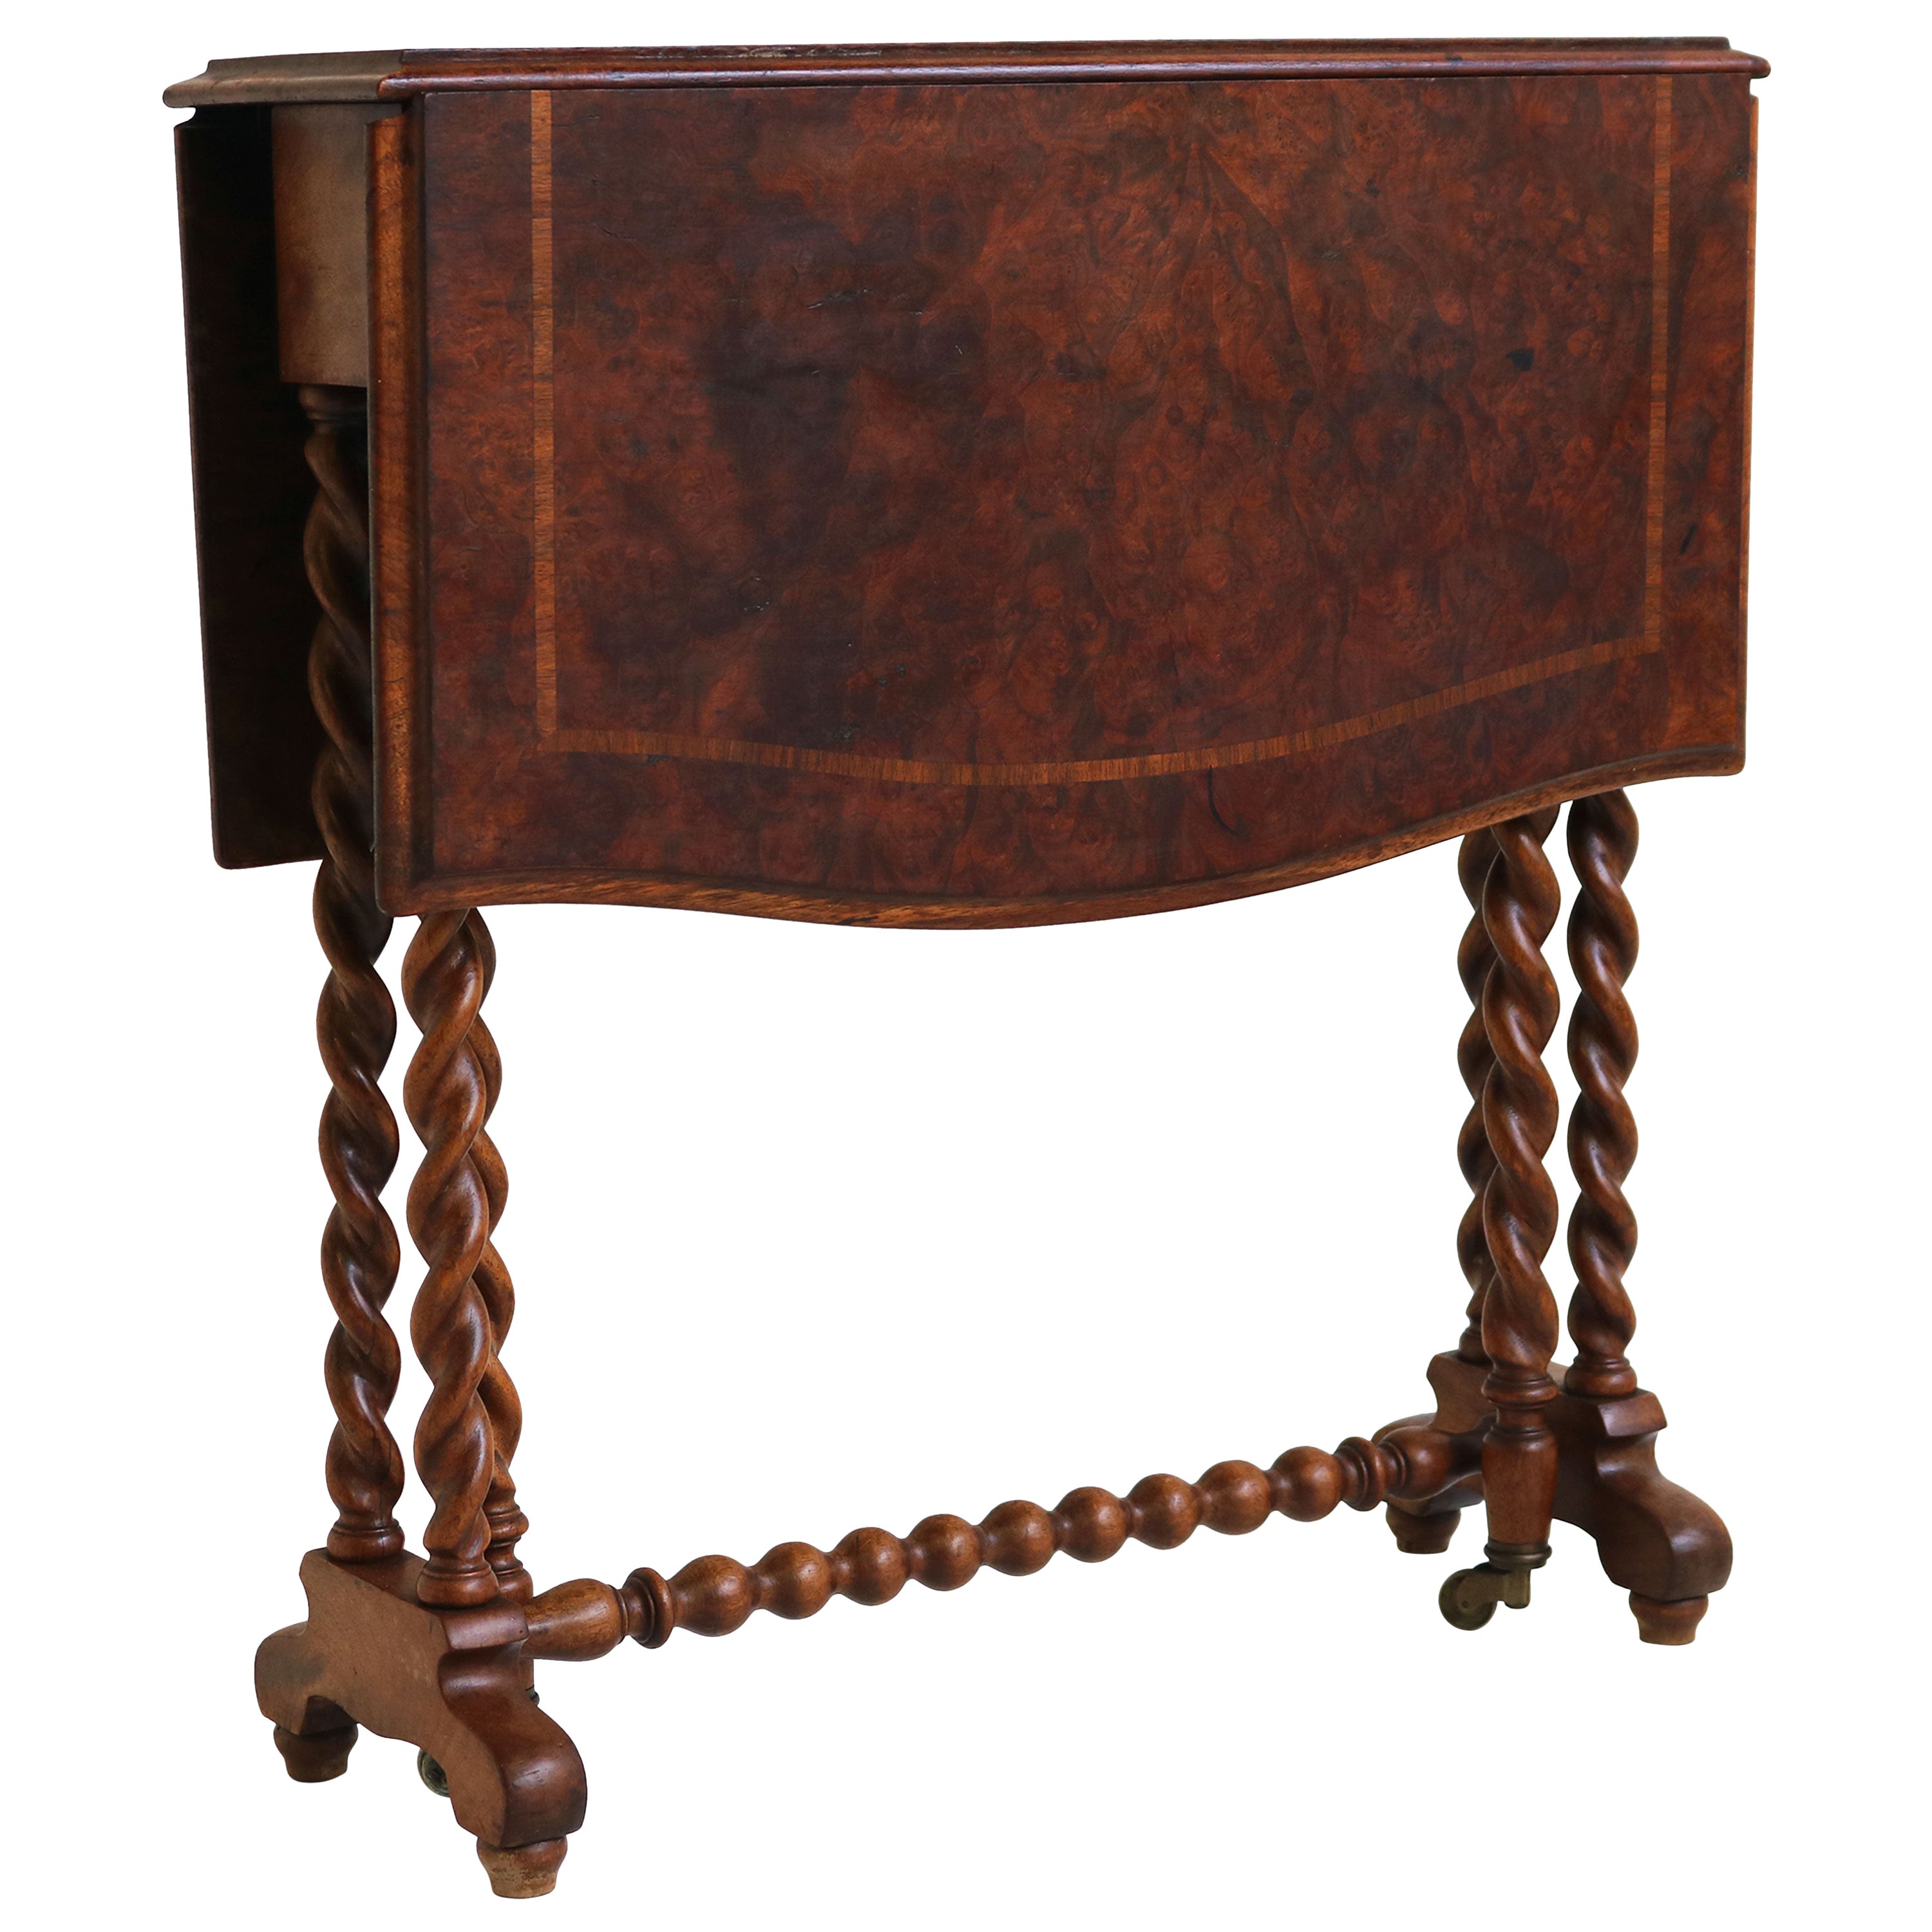 Antique English Barley Twist Foldable Table / Gate-Leg Table 19th Century Burl For Sale